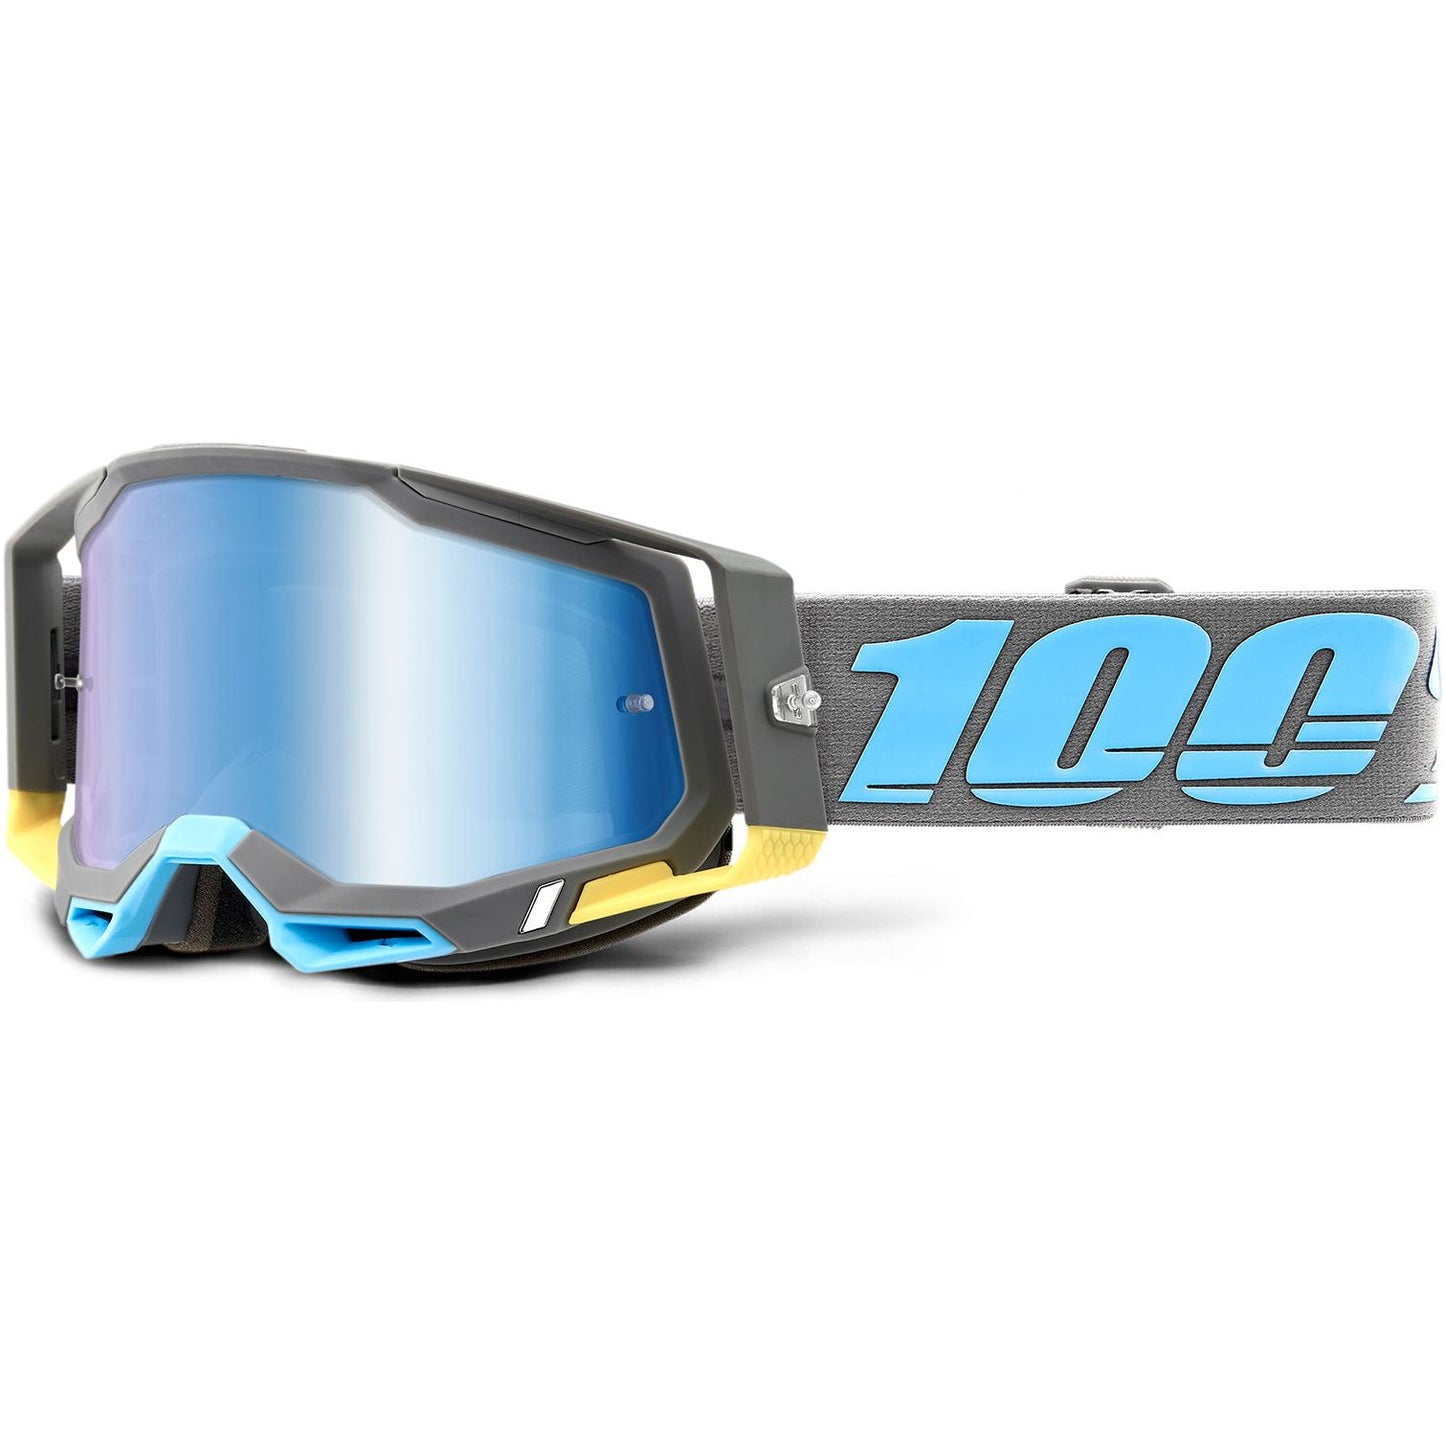 100 Percent Racecraft 2 Goggles - One Size Fits Most - Trinidad - Blue Mirror Lens